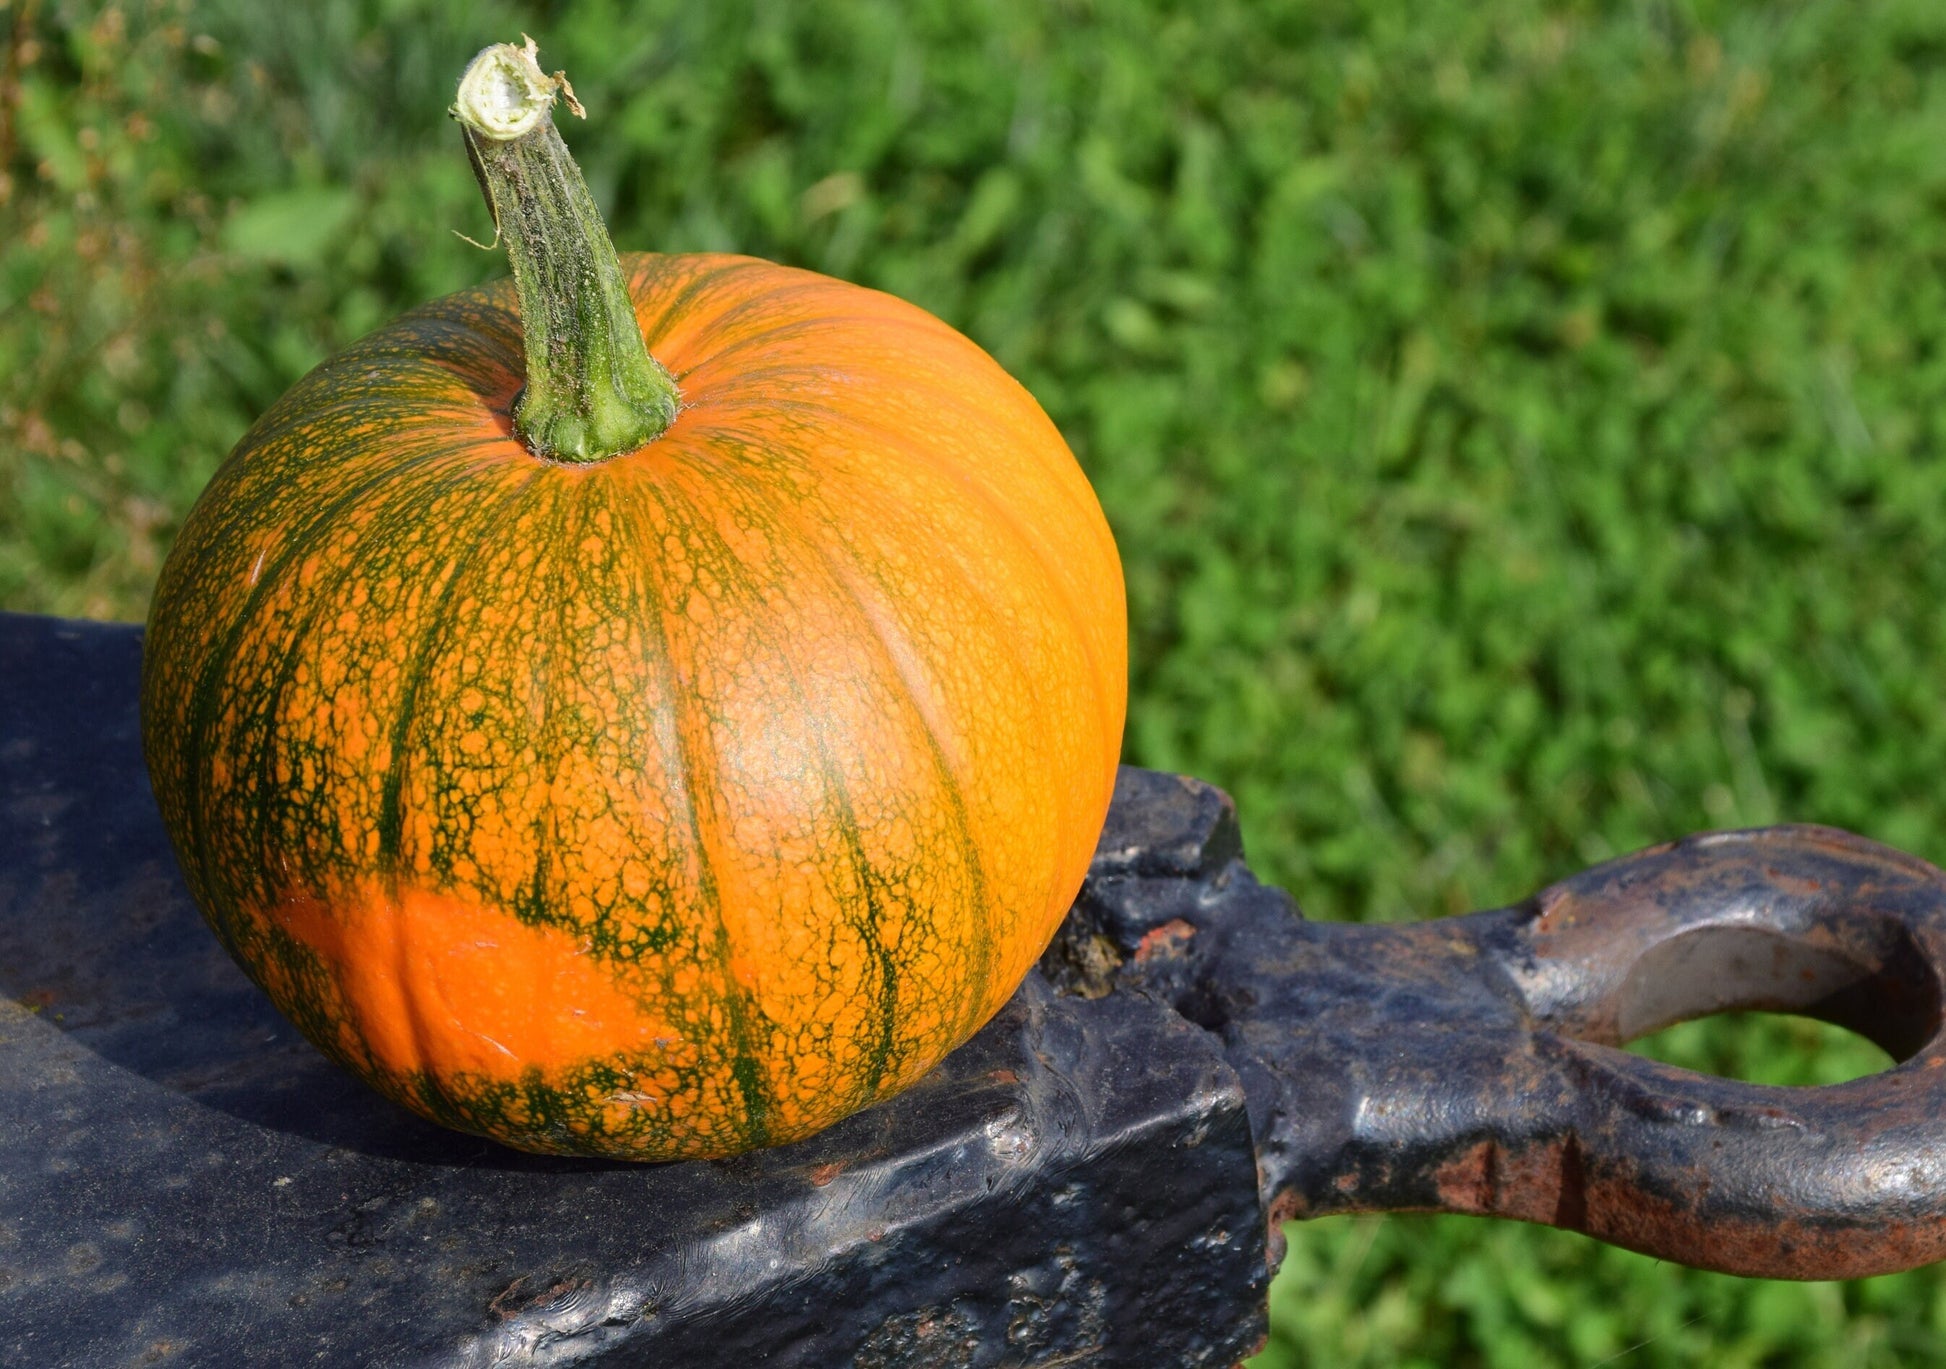 Pumpkin - Vegetable Seeds - Large Orange - Perfect for Carving at Halloween